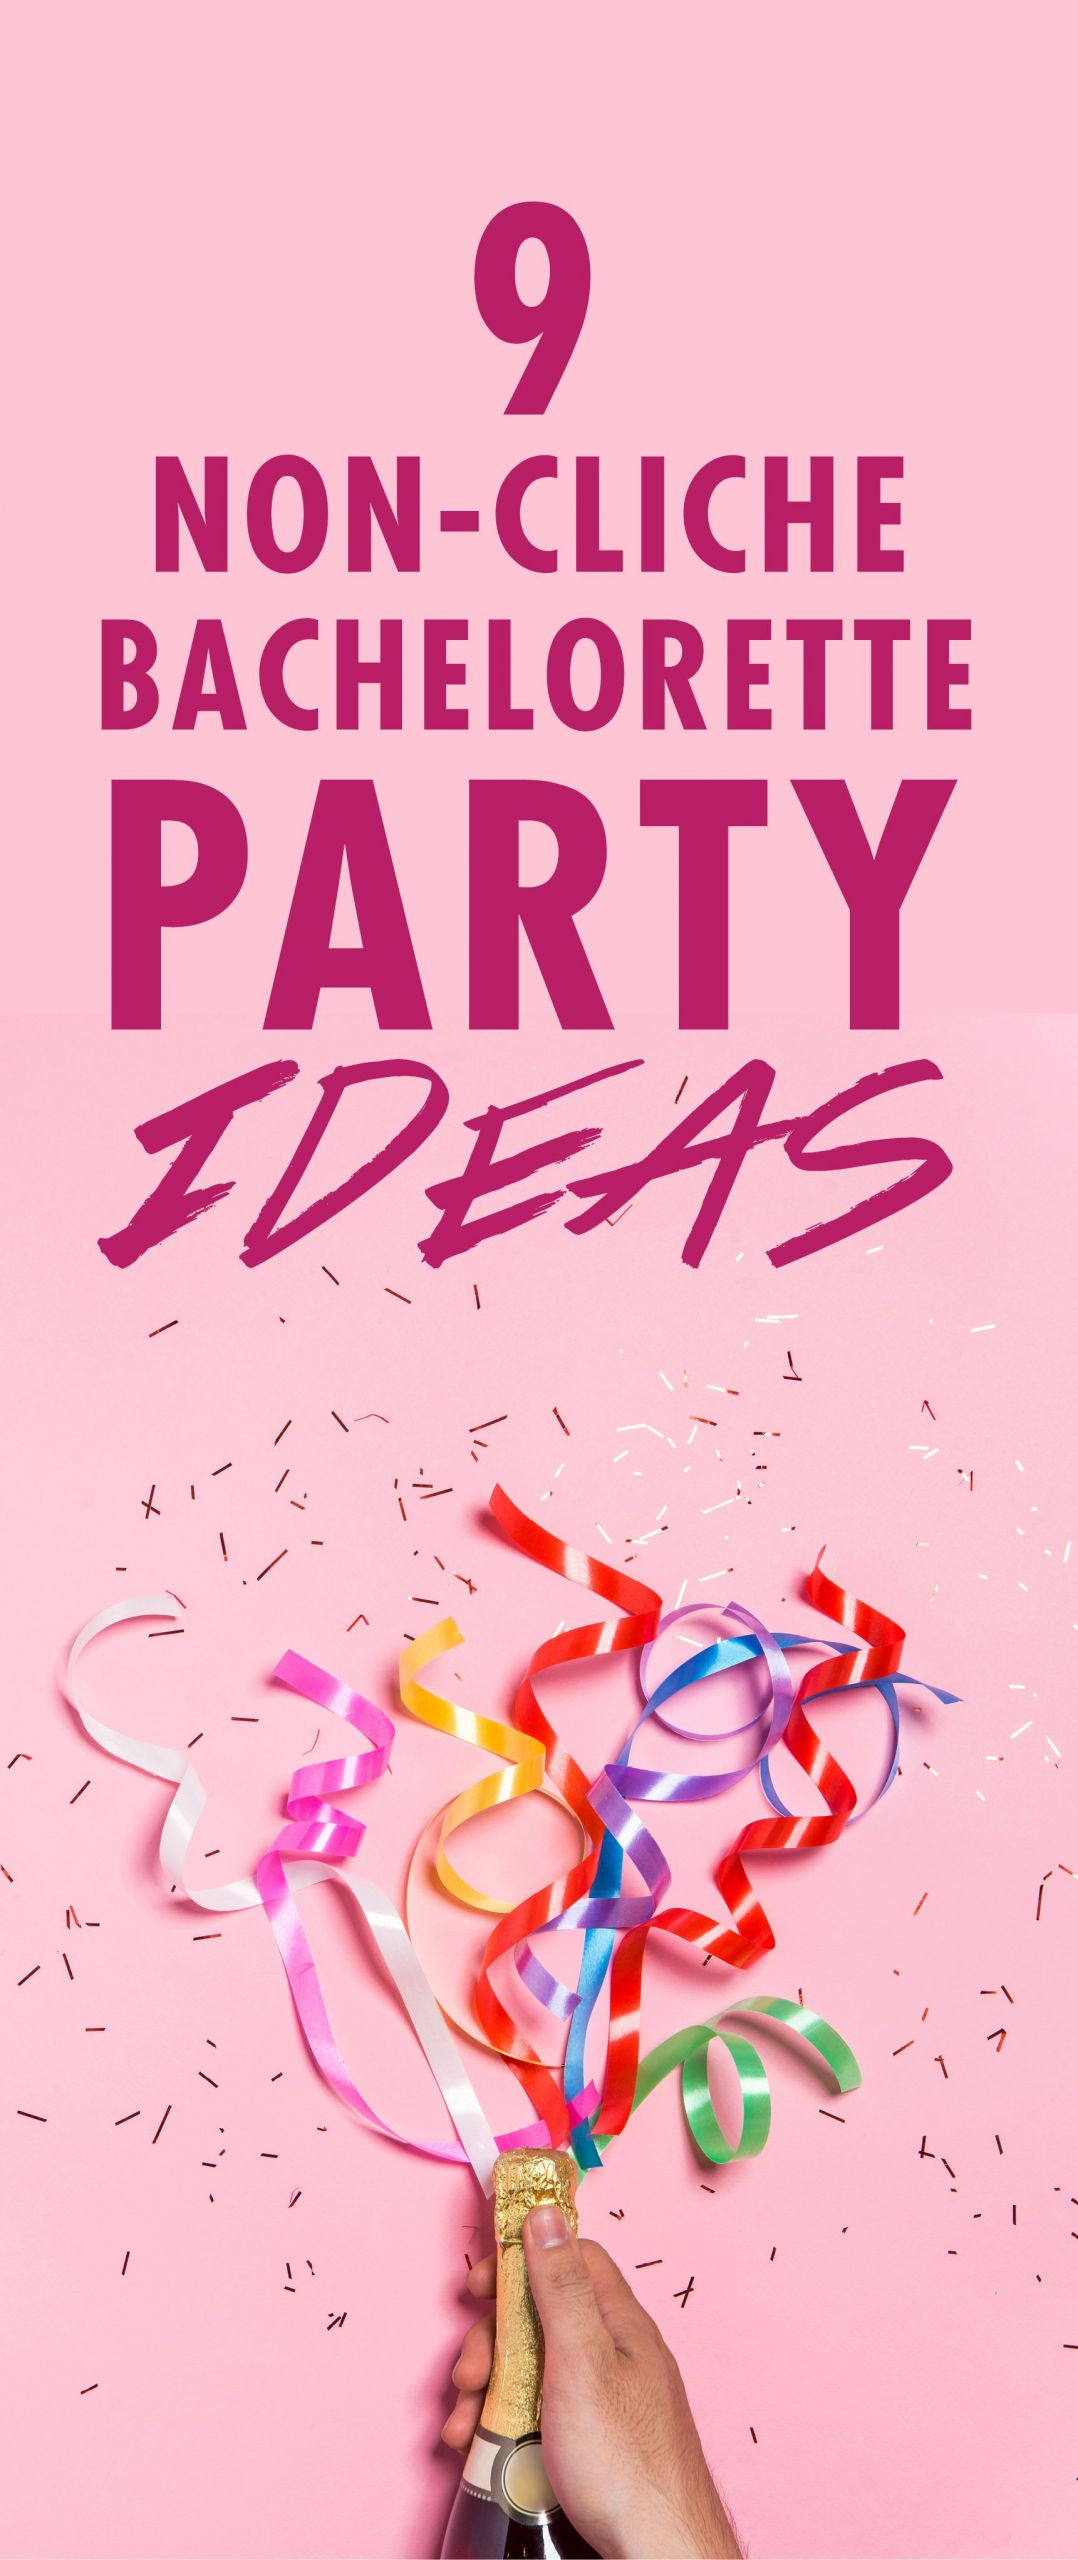 Bachelorette Slumber Party Ideas
 9 Non Cliché Bachelorette Party Ideas Every Bridal Party